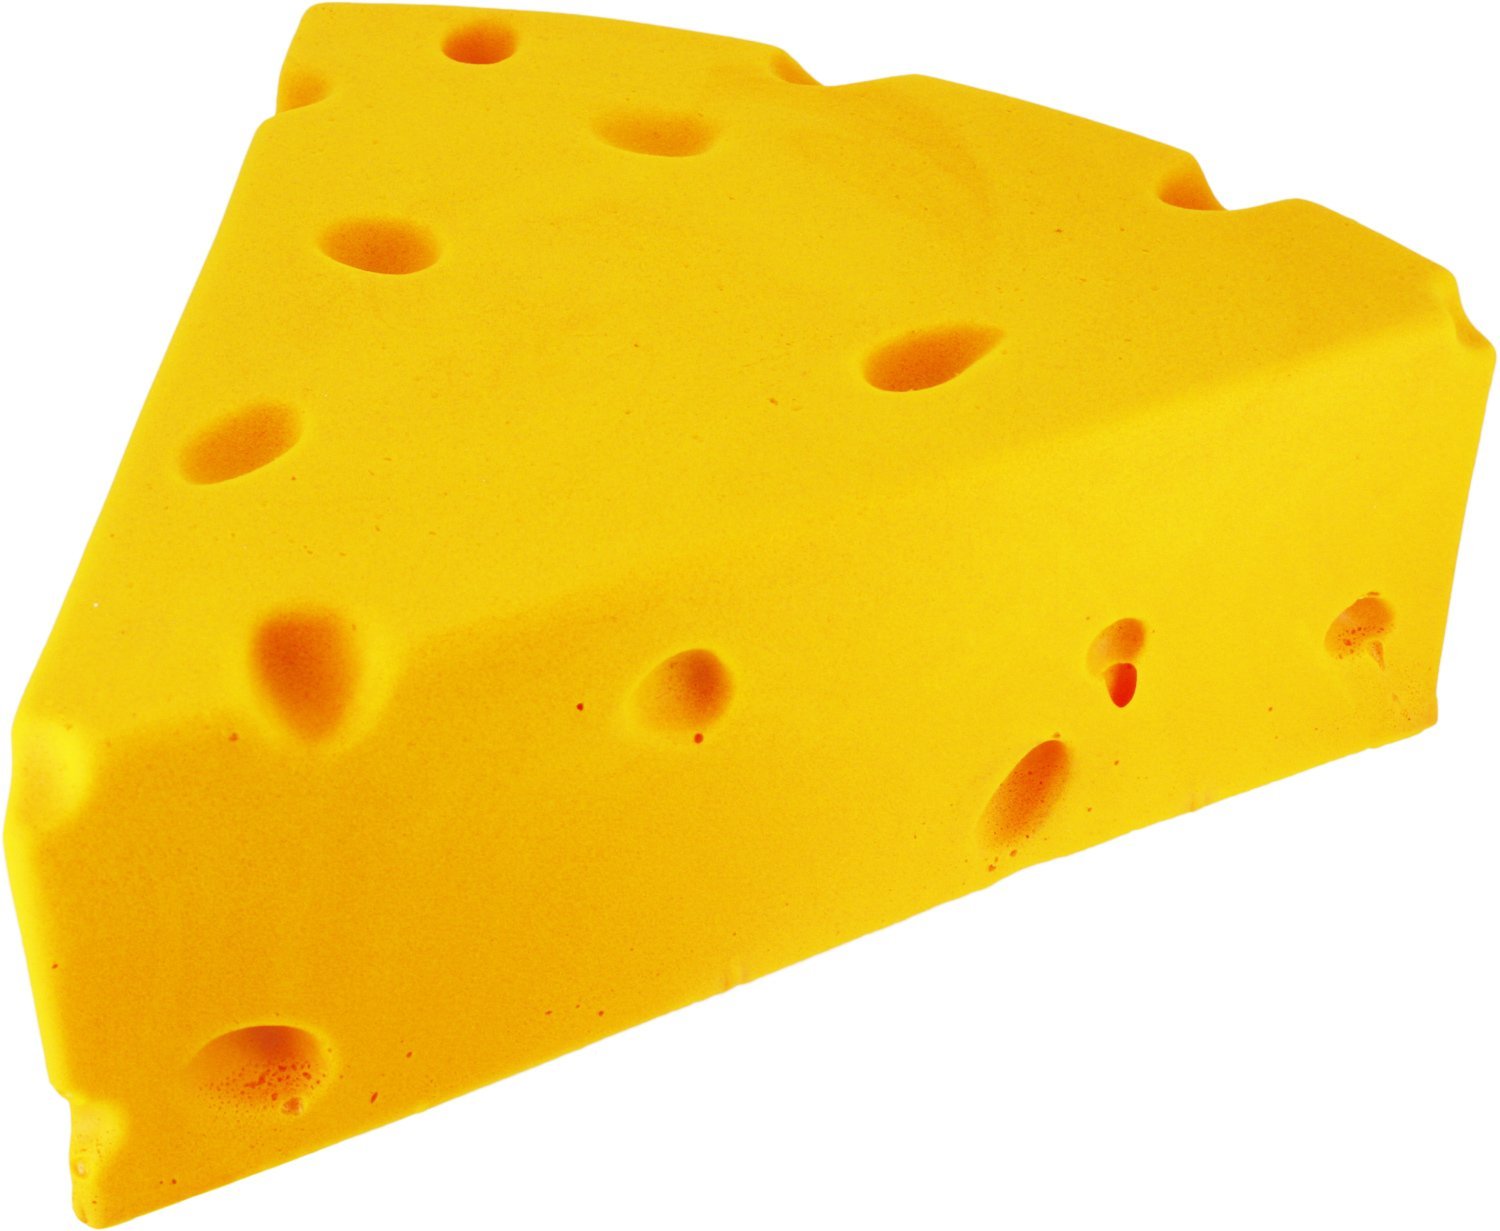 Cheese [1994– ]